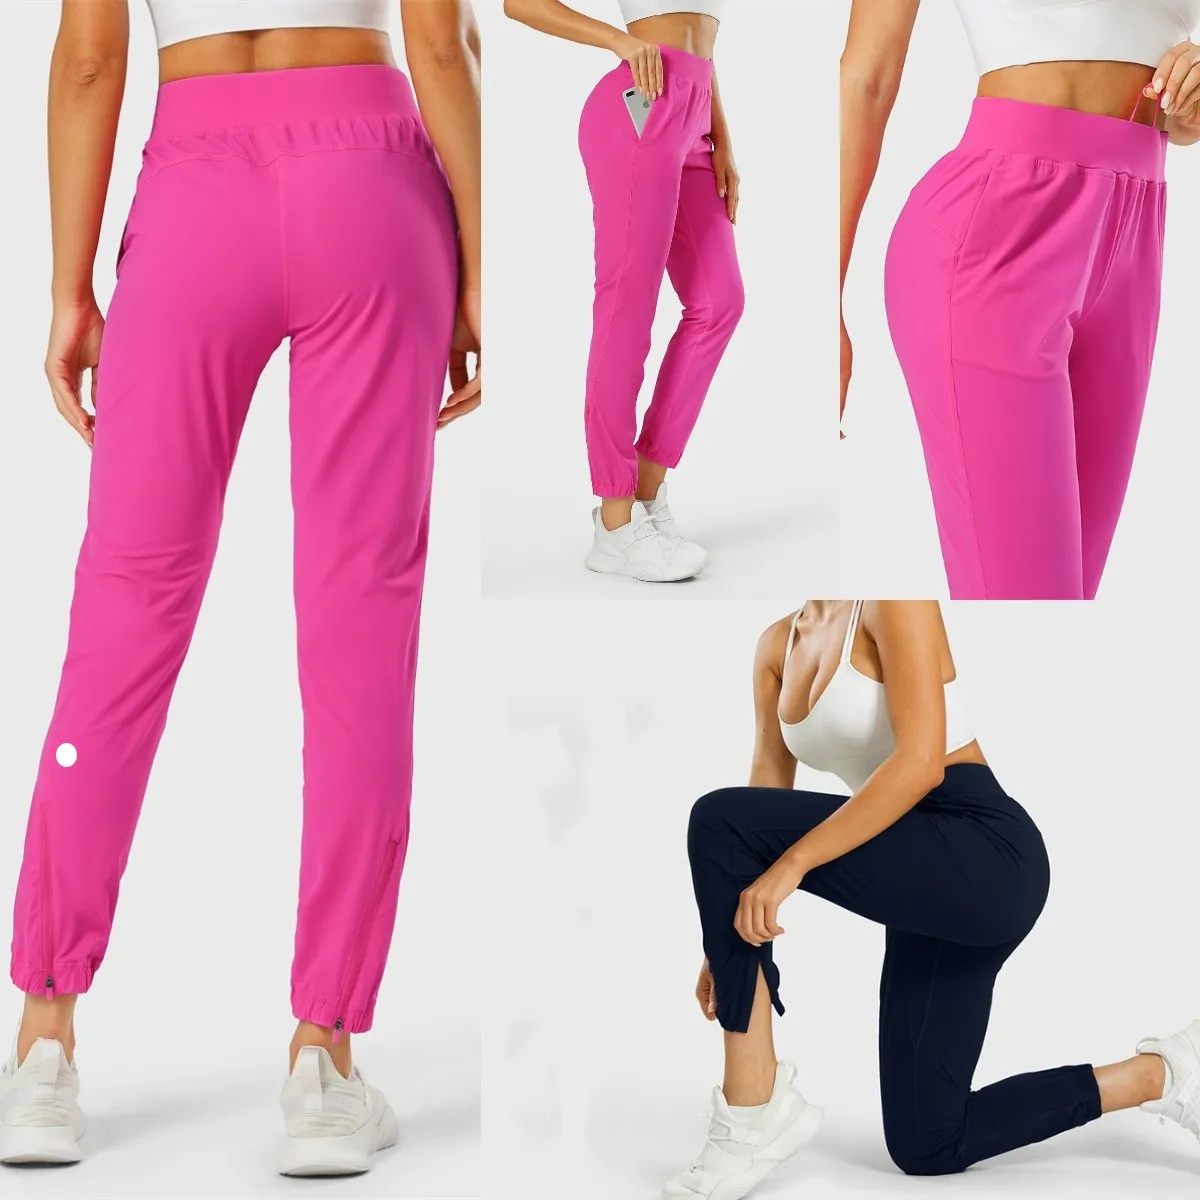 LU-1028 Vrouwen Yoga Wear Girl Jogging Aangepast Aangepast State Rettery High Taille Training Strap Gym Pants